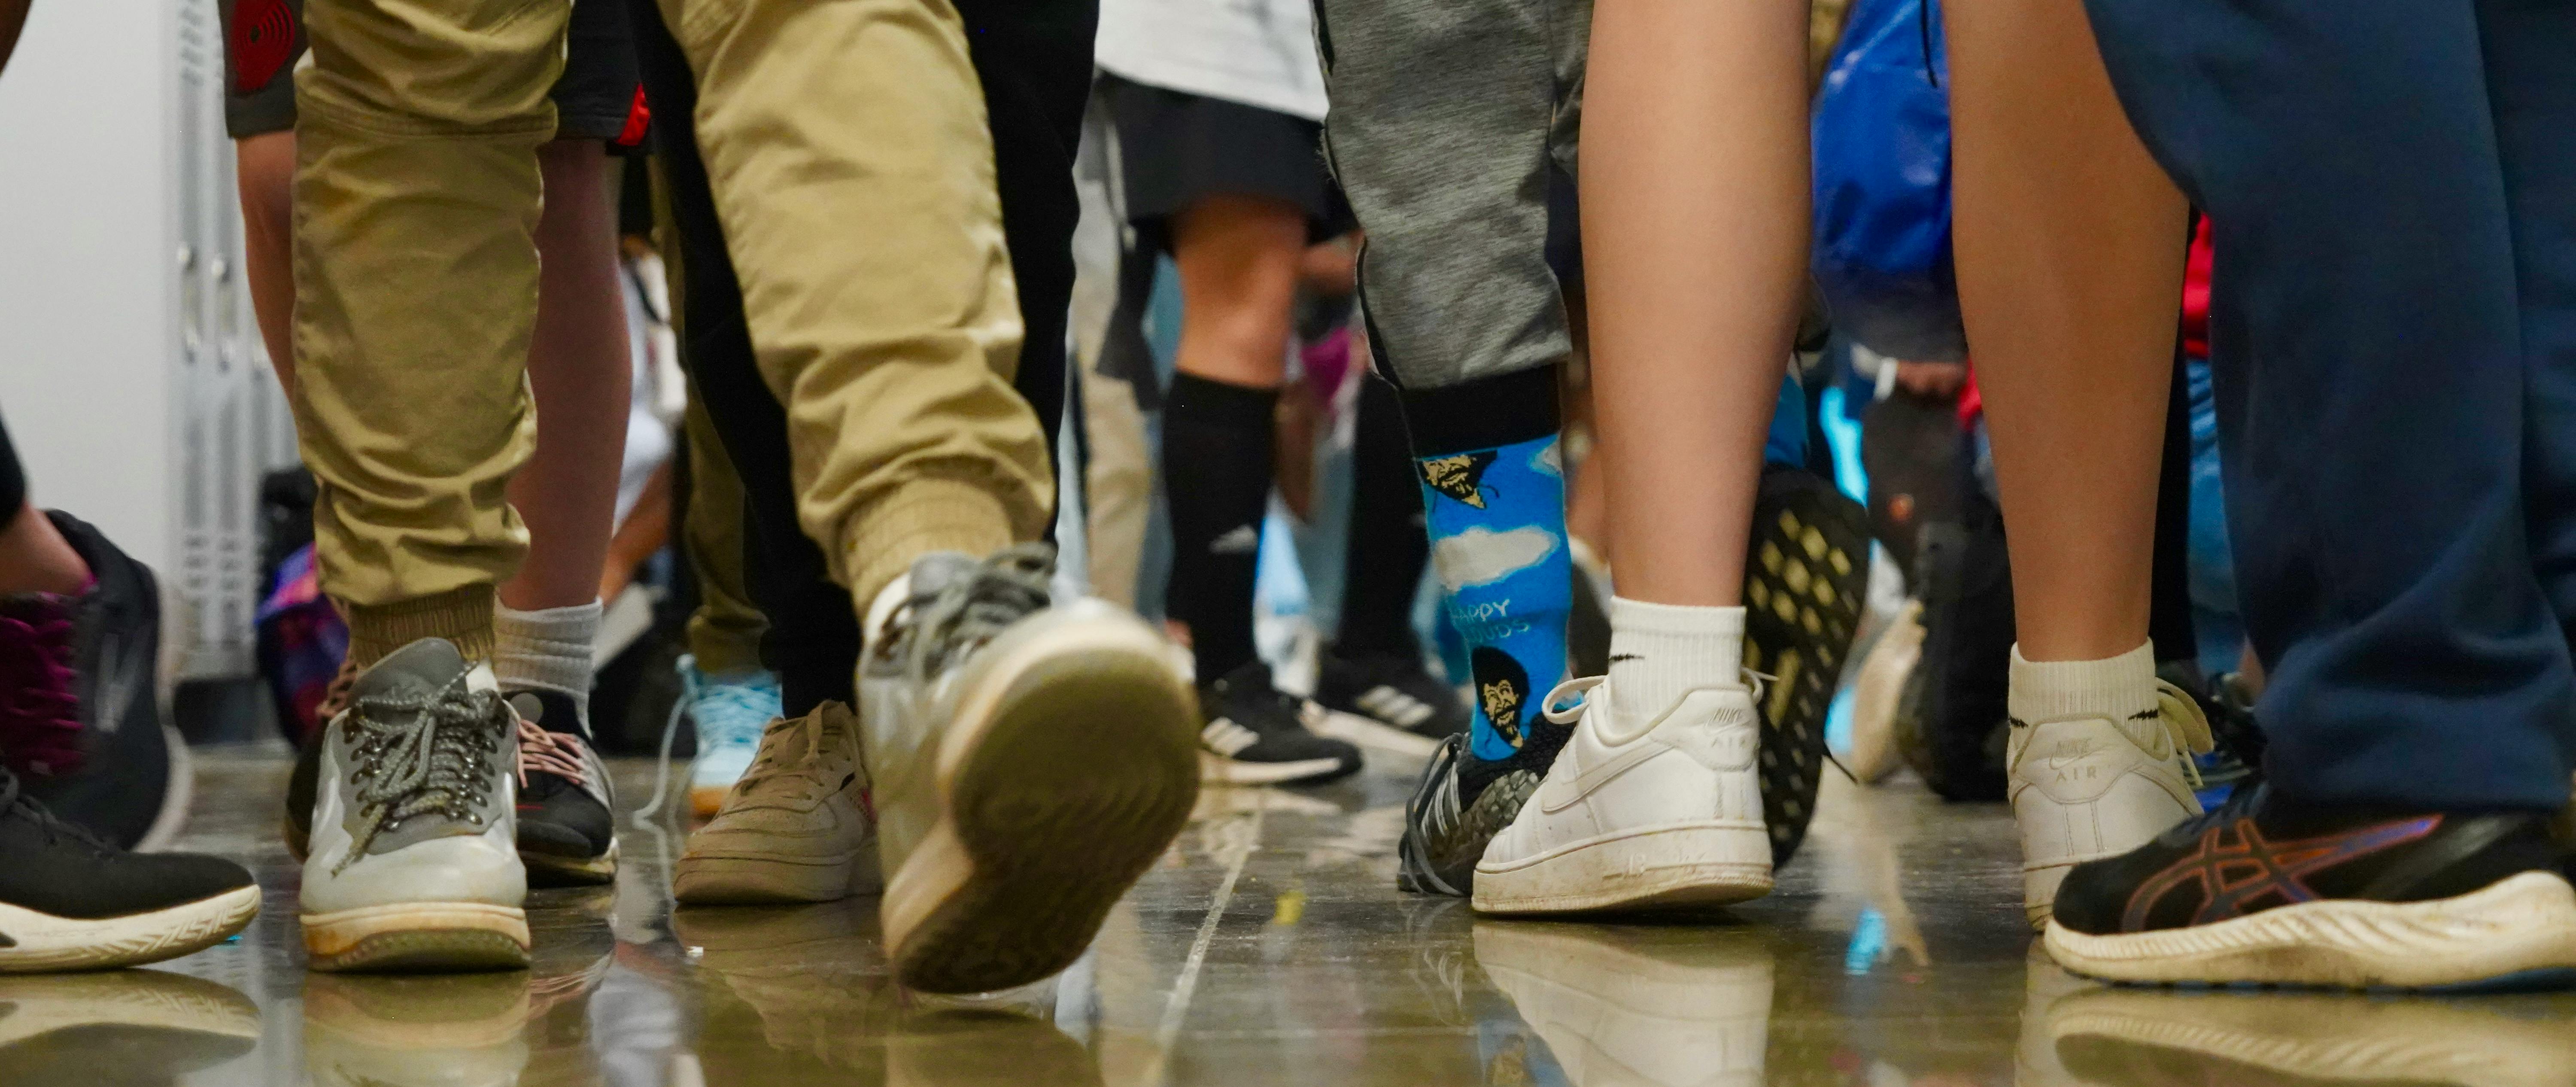 Students' feet in school hallway